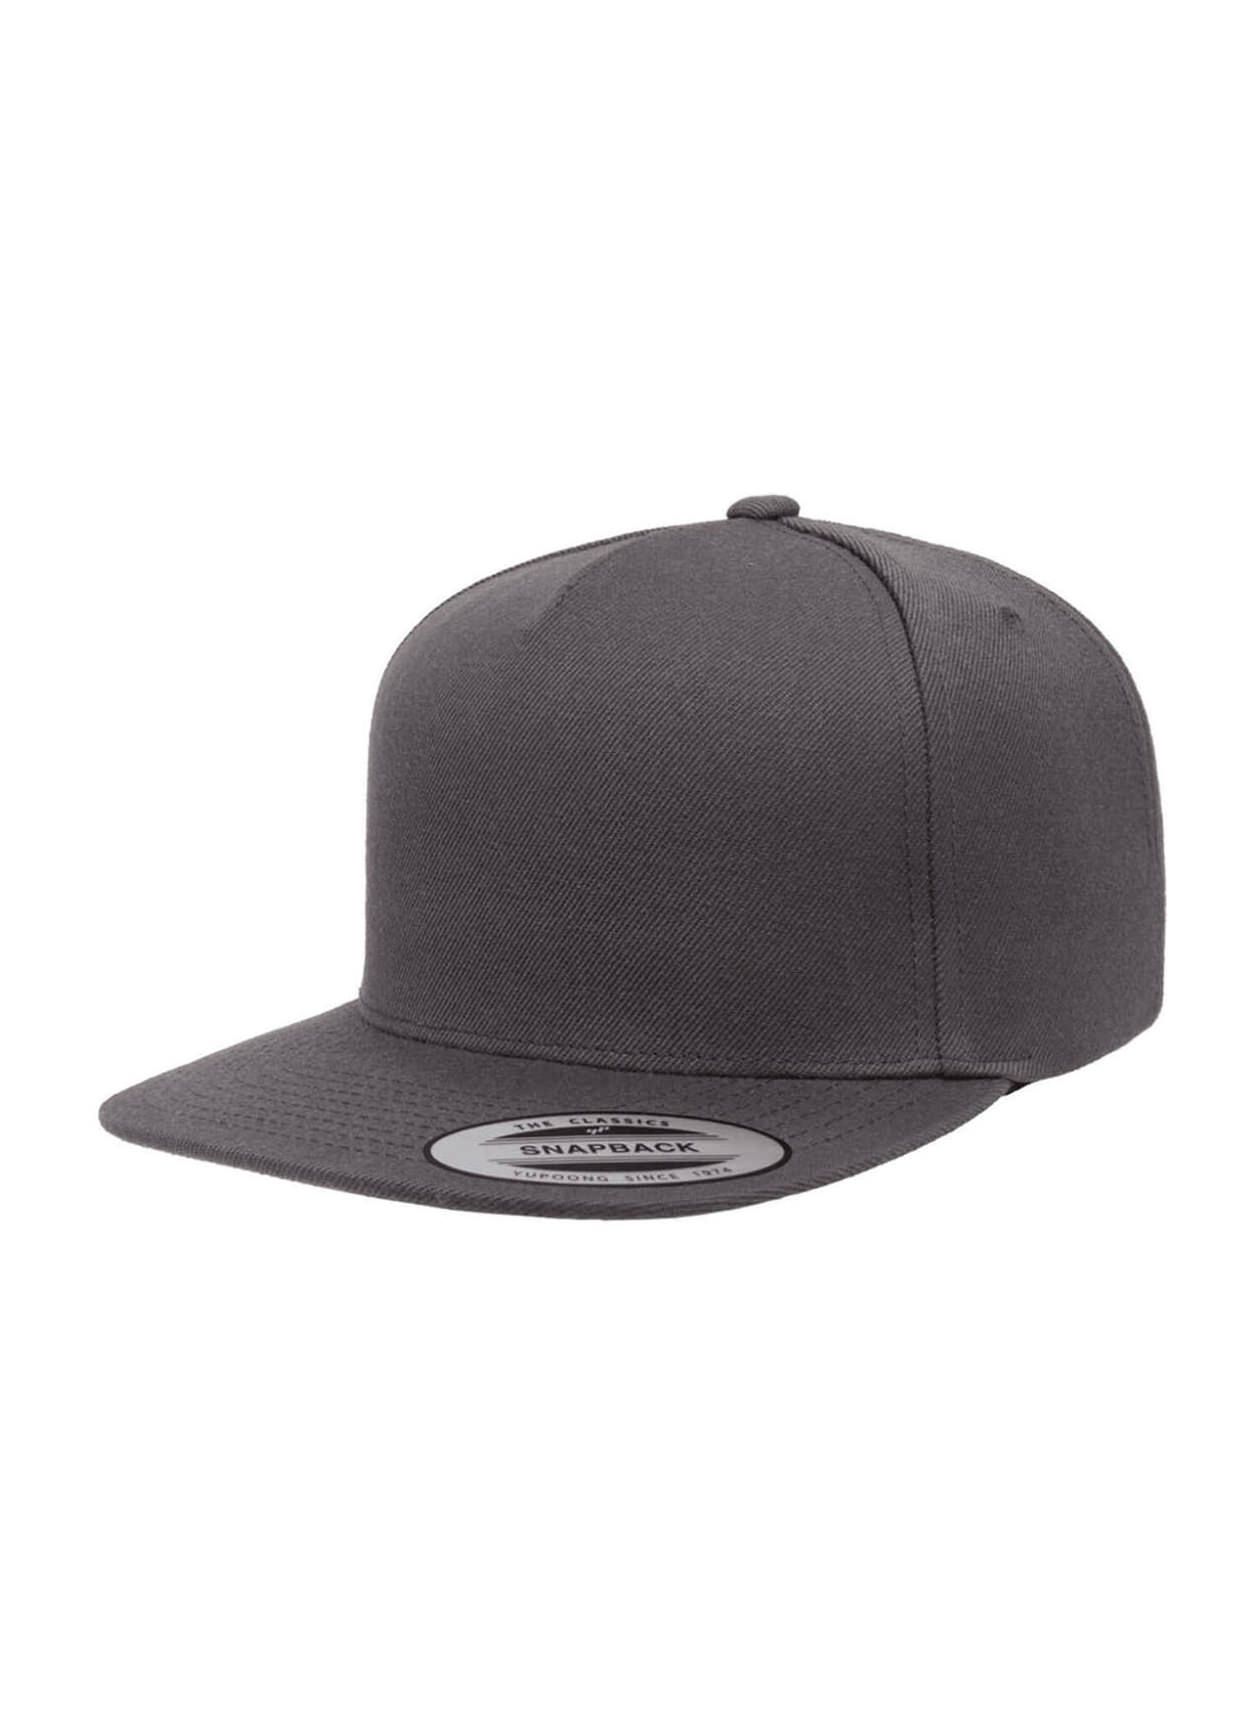 Yupoong Dark Grey 5-Panel Structured Flat Visor Classic Snapback Hat